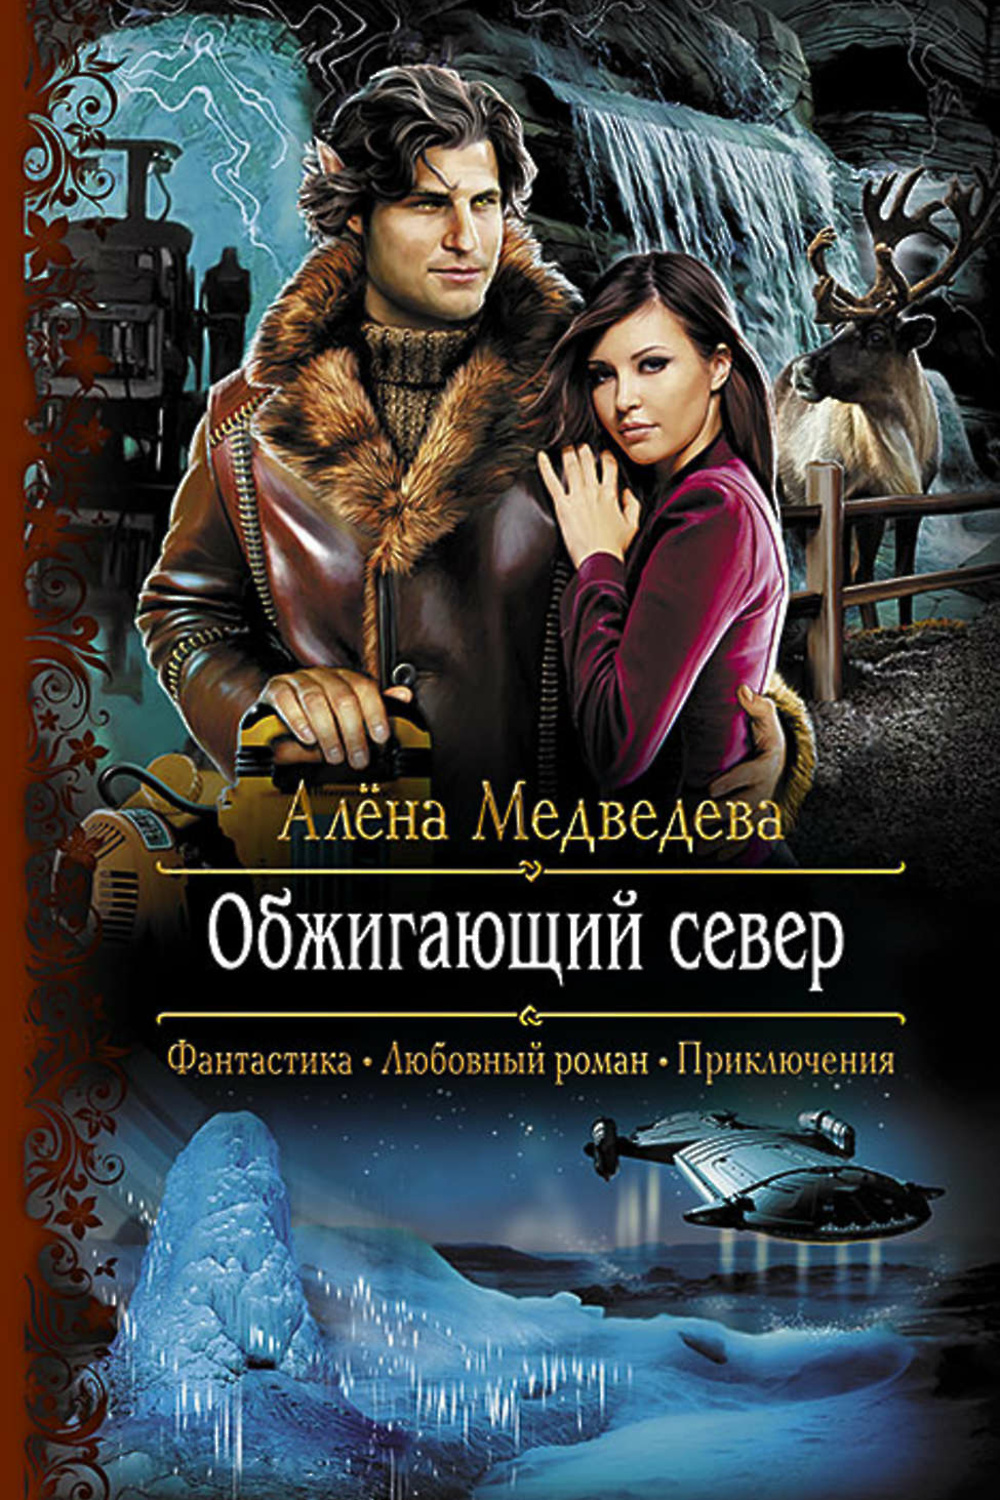 Медведева обложка. Алена Медведева Иномирец. Книги фэнтези.